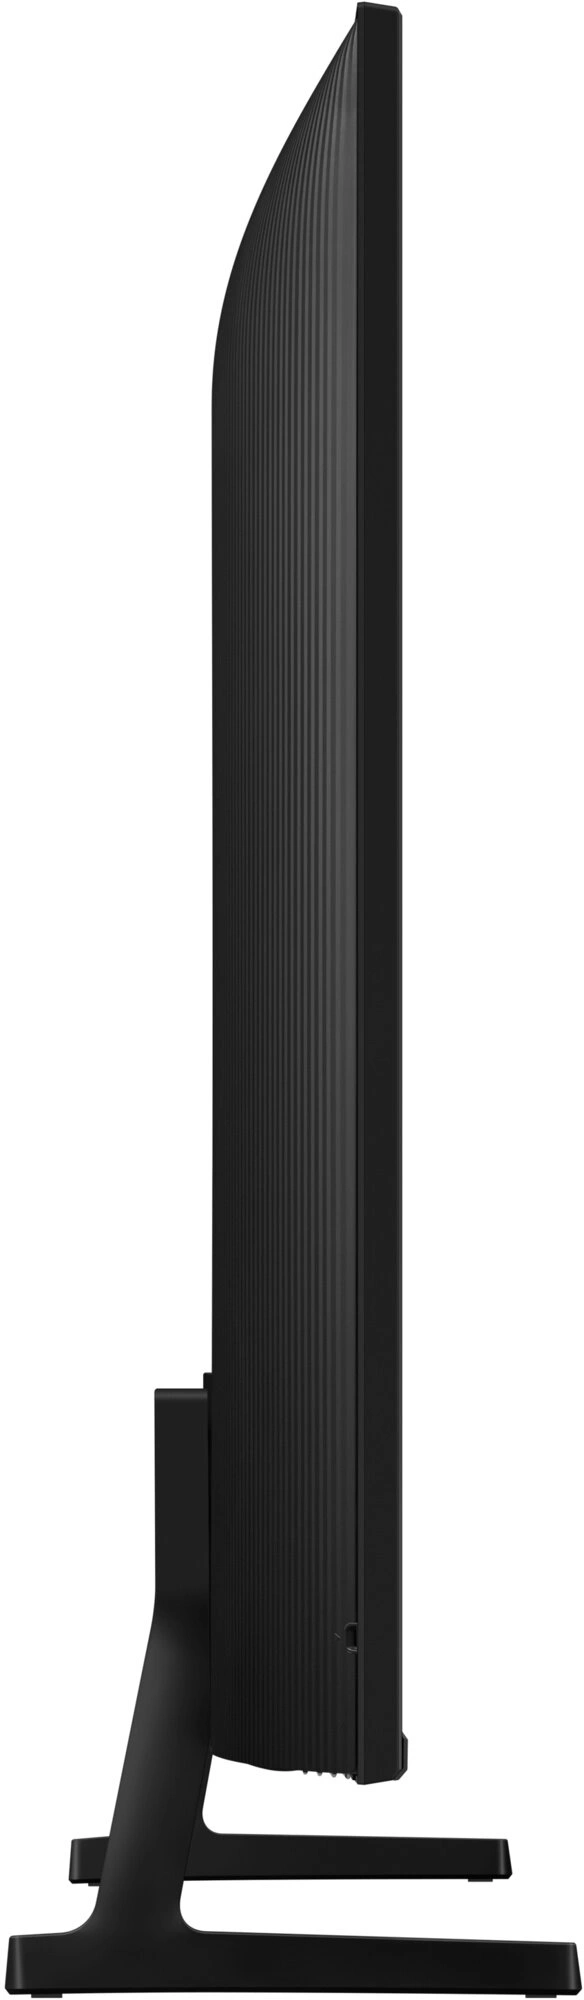 Samsung UE50DU7172 - 127cm